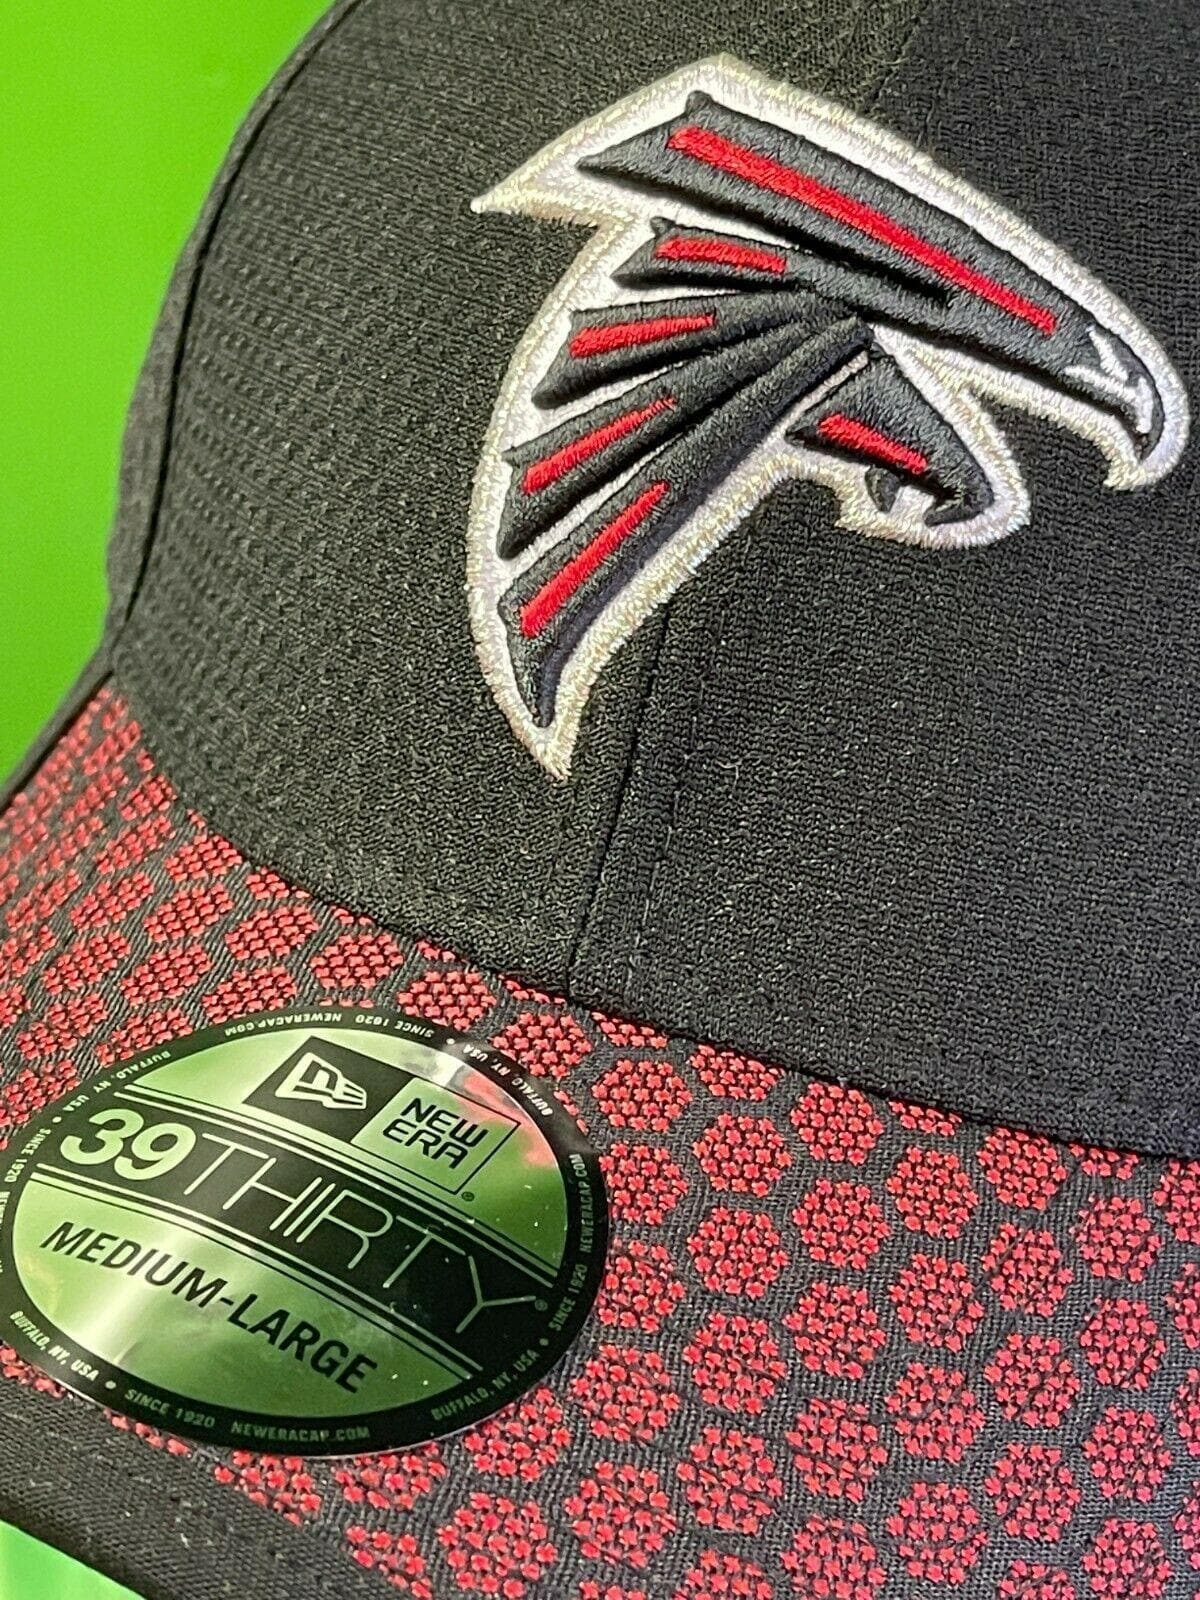 NFL Atlanta Falcons New Era 39THIRTY On Field Cap Hat M-L NWT